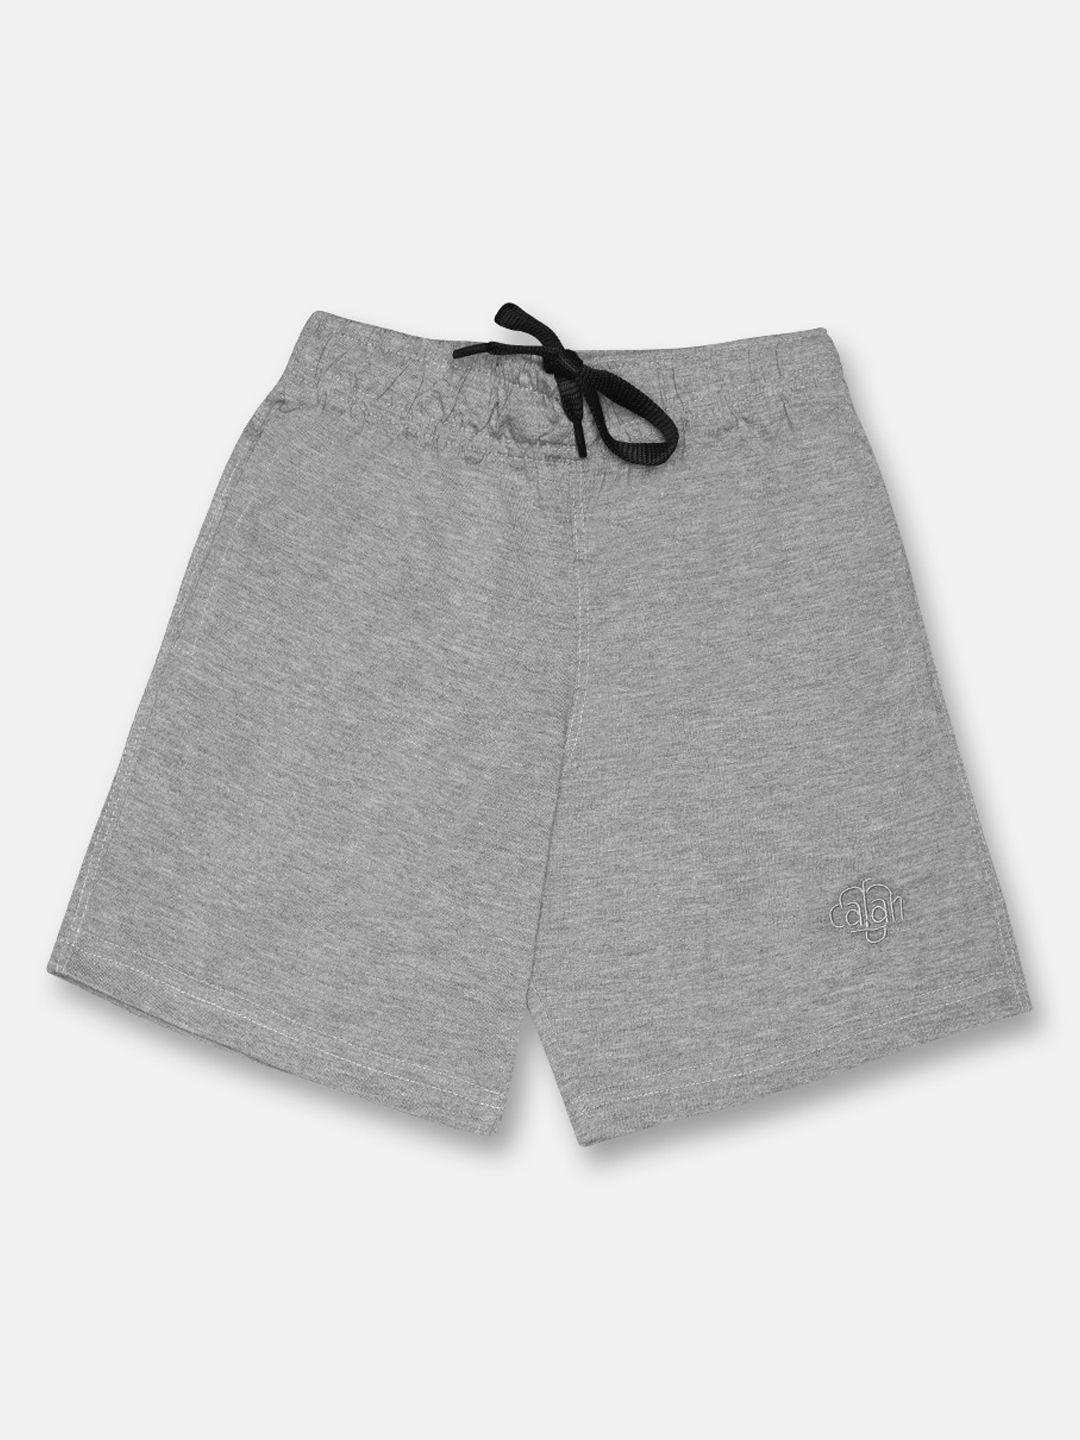 chimprala unisex kids grey mid-rise regular shorts